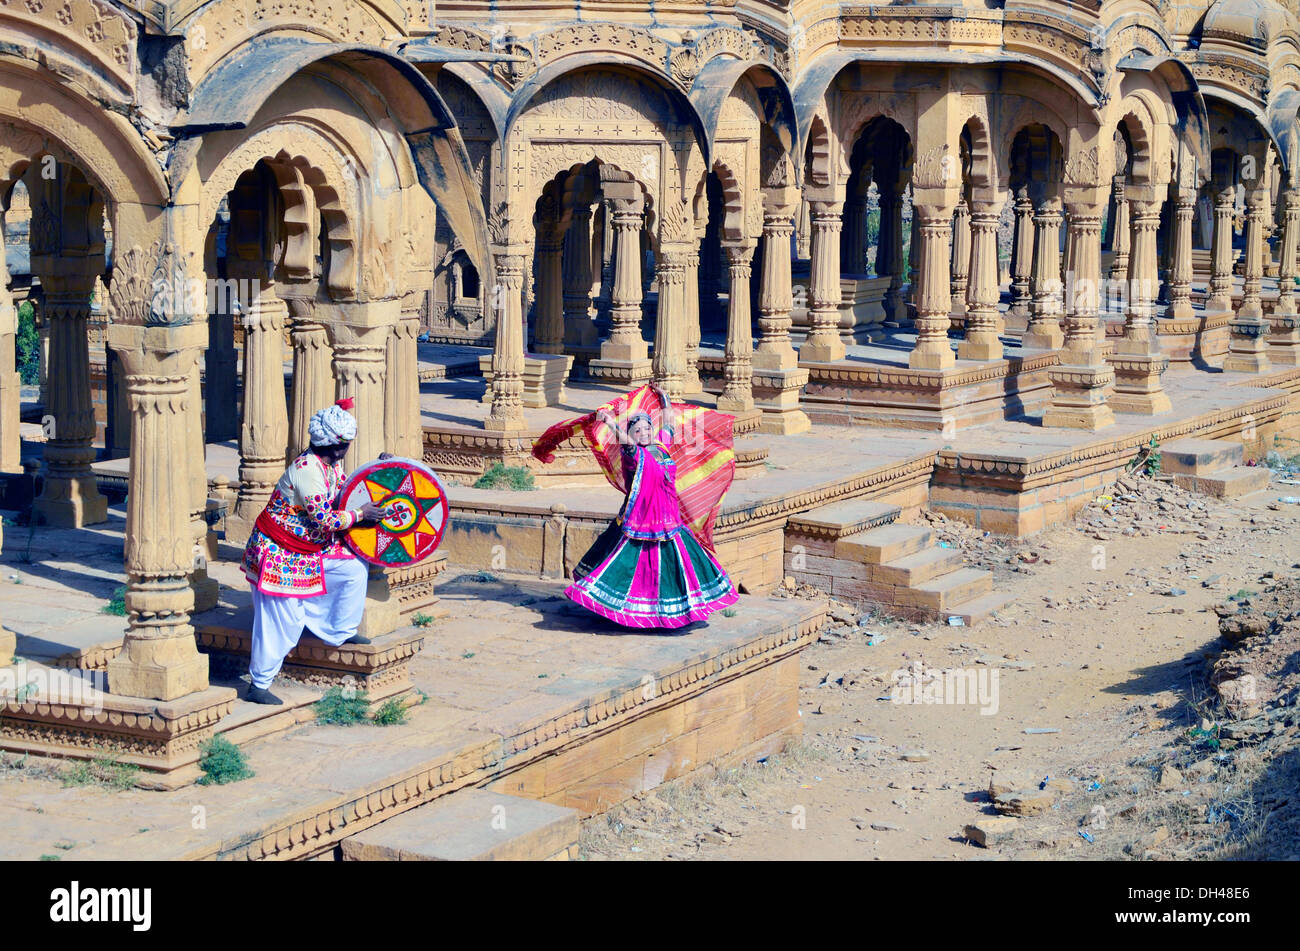 Indian man duff et femme dansant Rajasthan Inde Asie M.# 704J et M.# 704J Banque D'Images